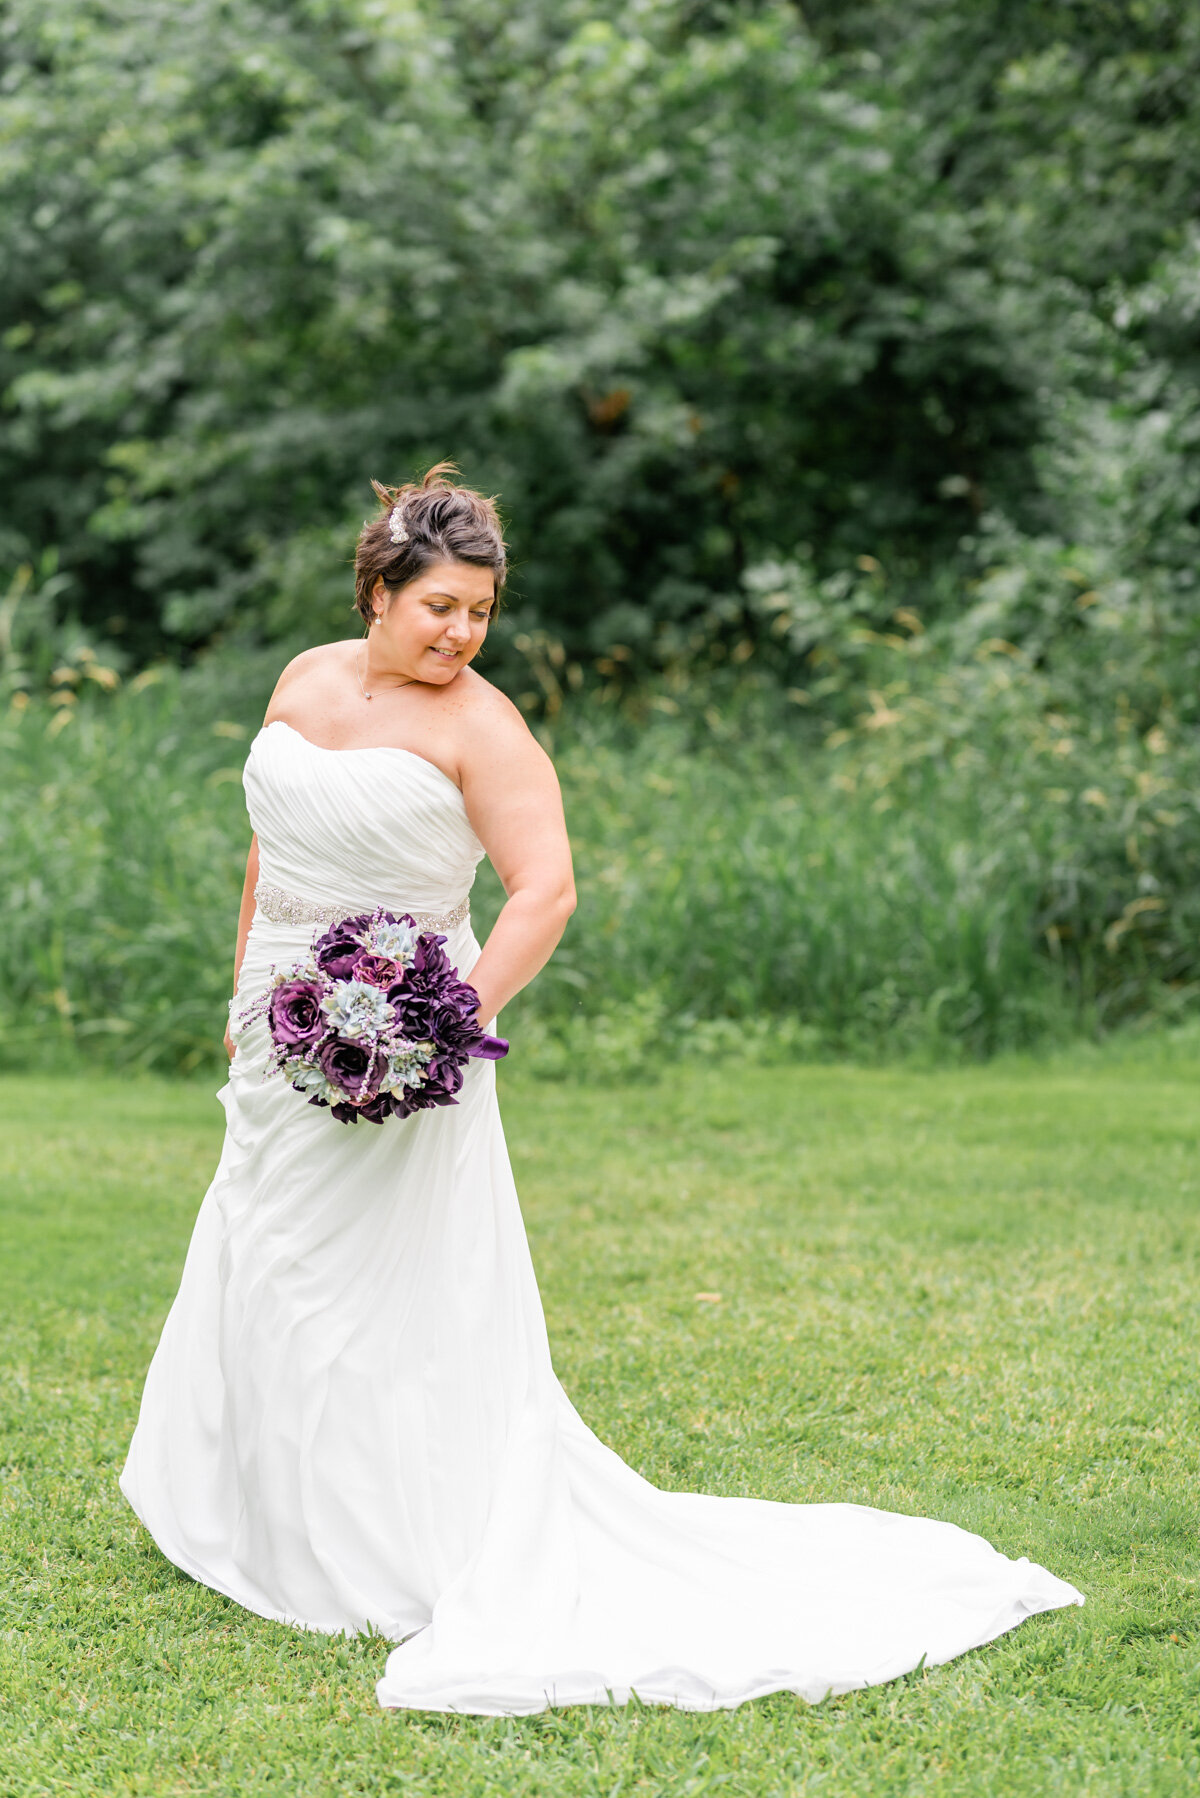 Summer Fargo Wedding Photography in Lindenwood Park | Chelsea Joy Photography